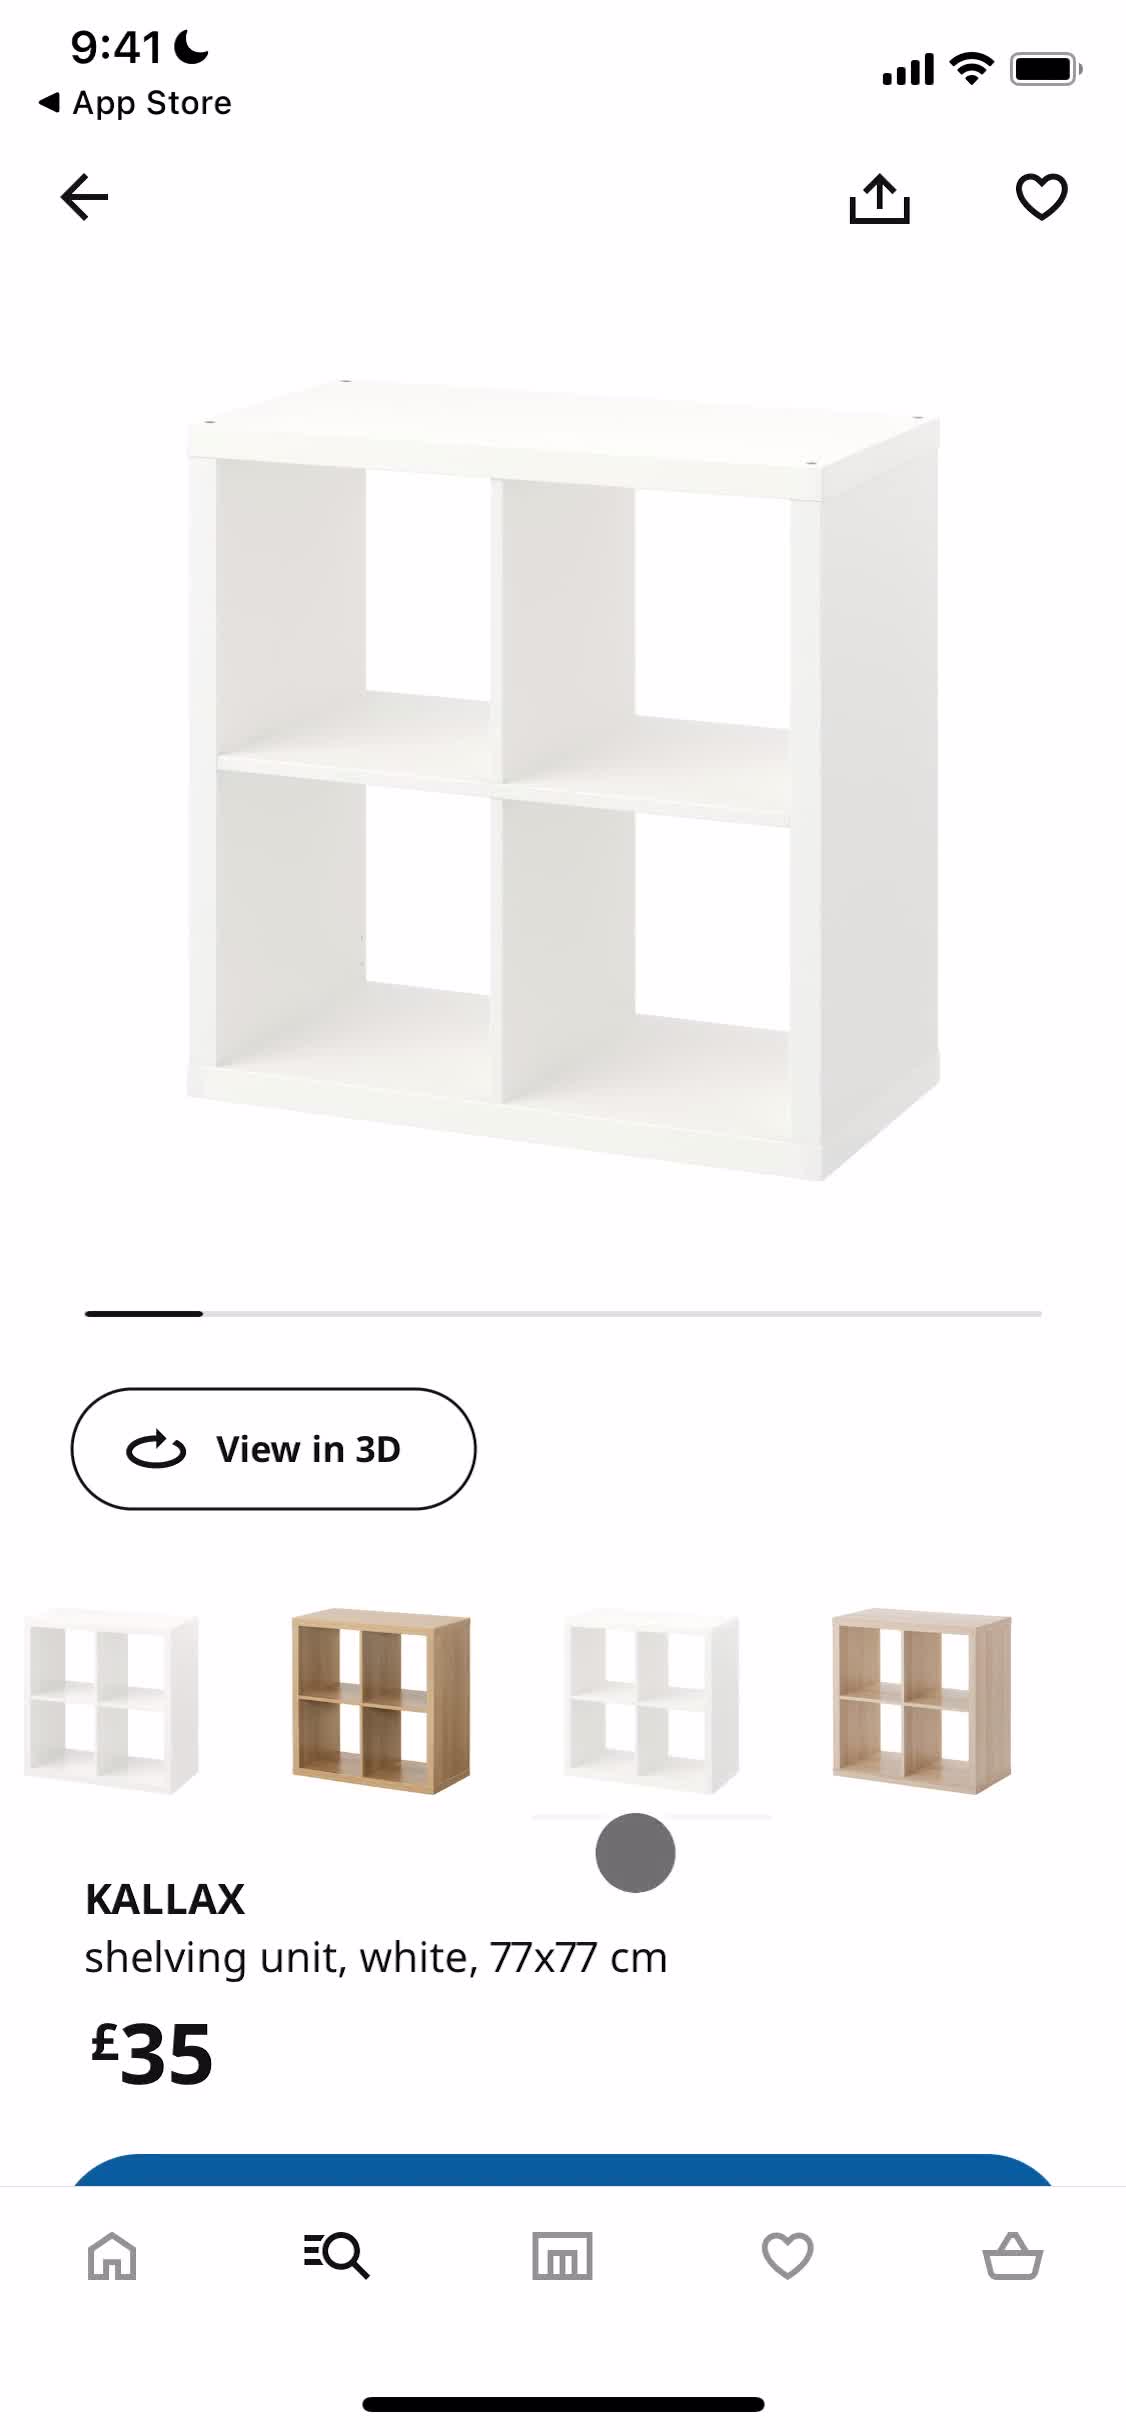 IKEA product detail screenshot